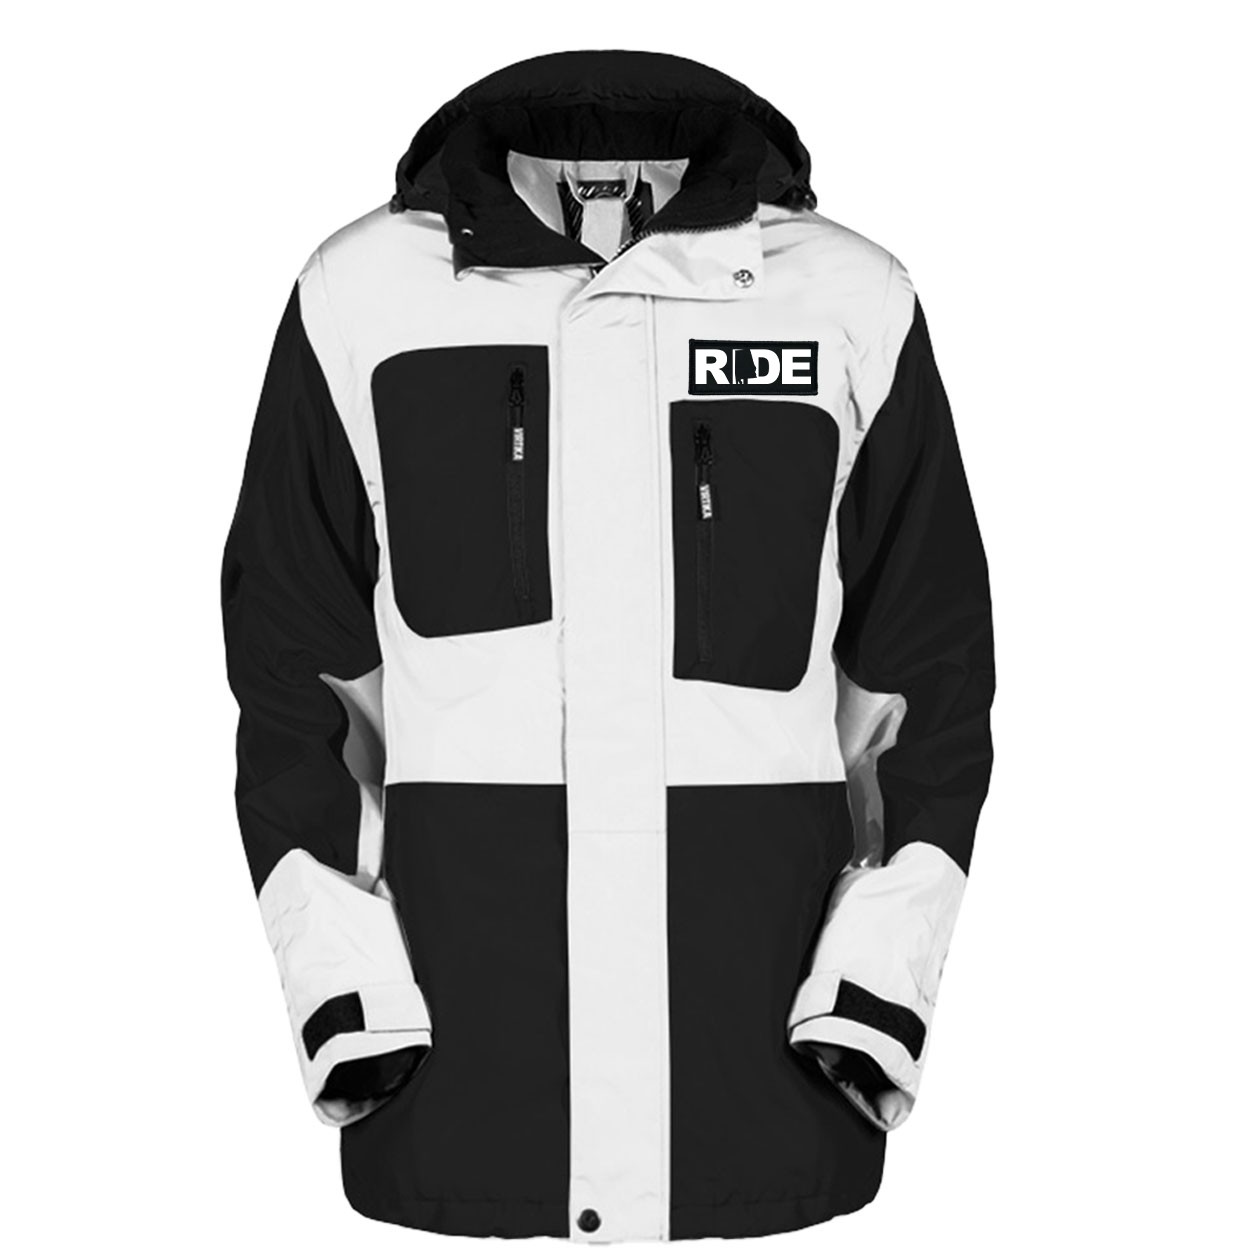 Ride Alabama Pro Waterproof Breathable Winter Virtika Jacket Black/White (White Logo)